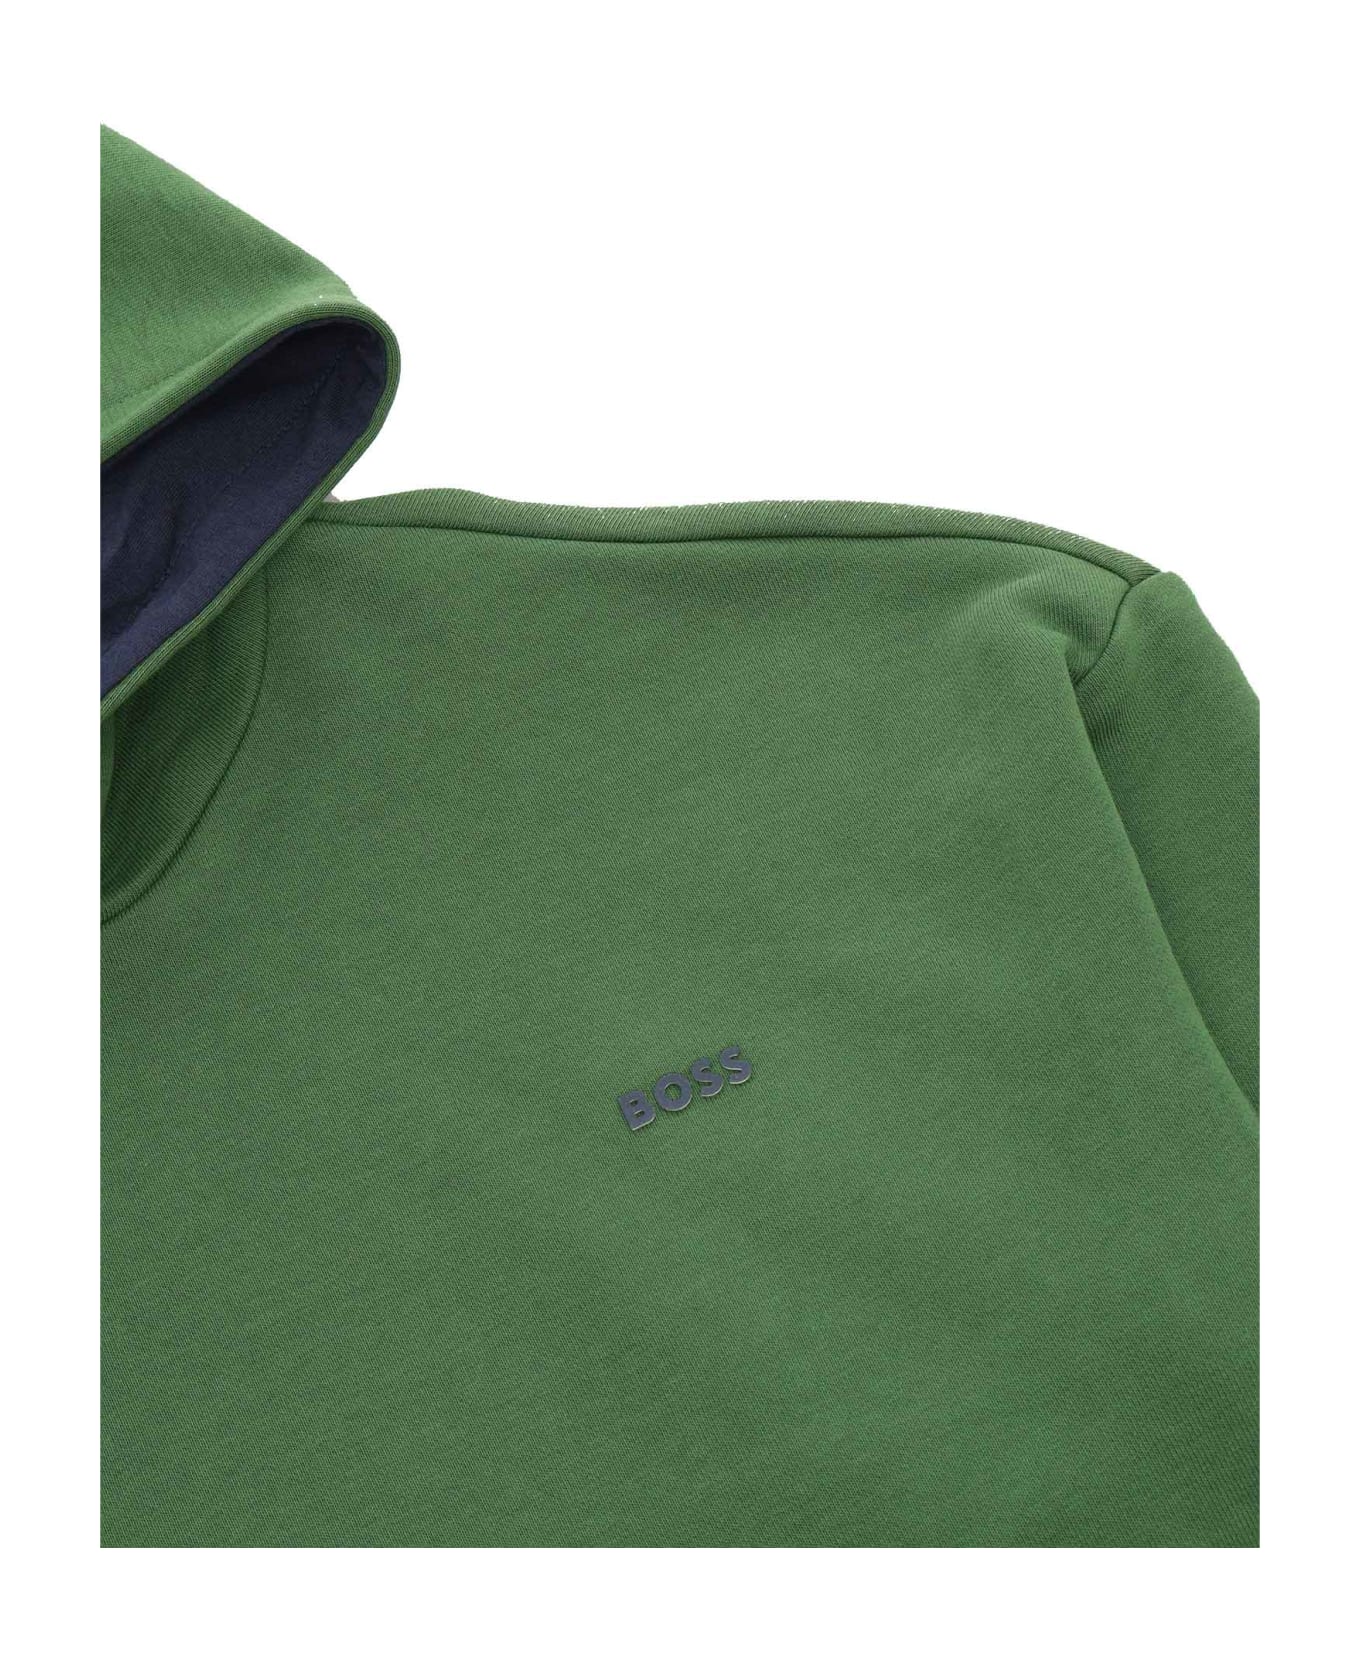 Hugo Boss Green Sweatshirt With Print - GREEN